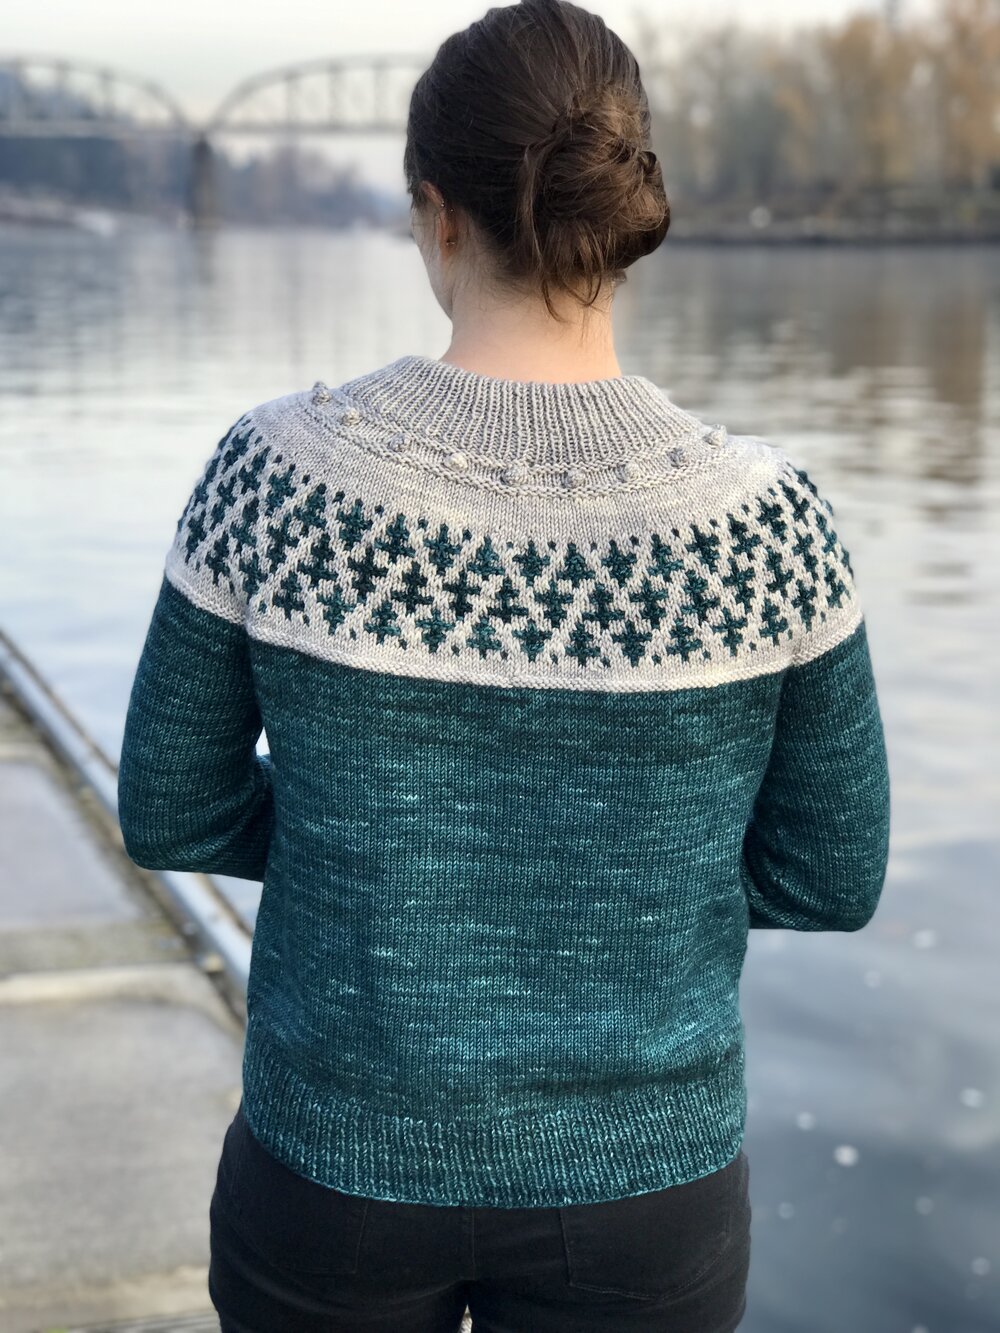 Tuck Pullover, Knitting Pattern by Véronik Avery